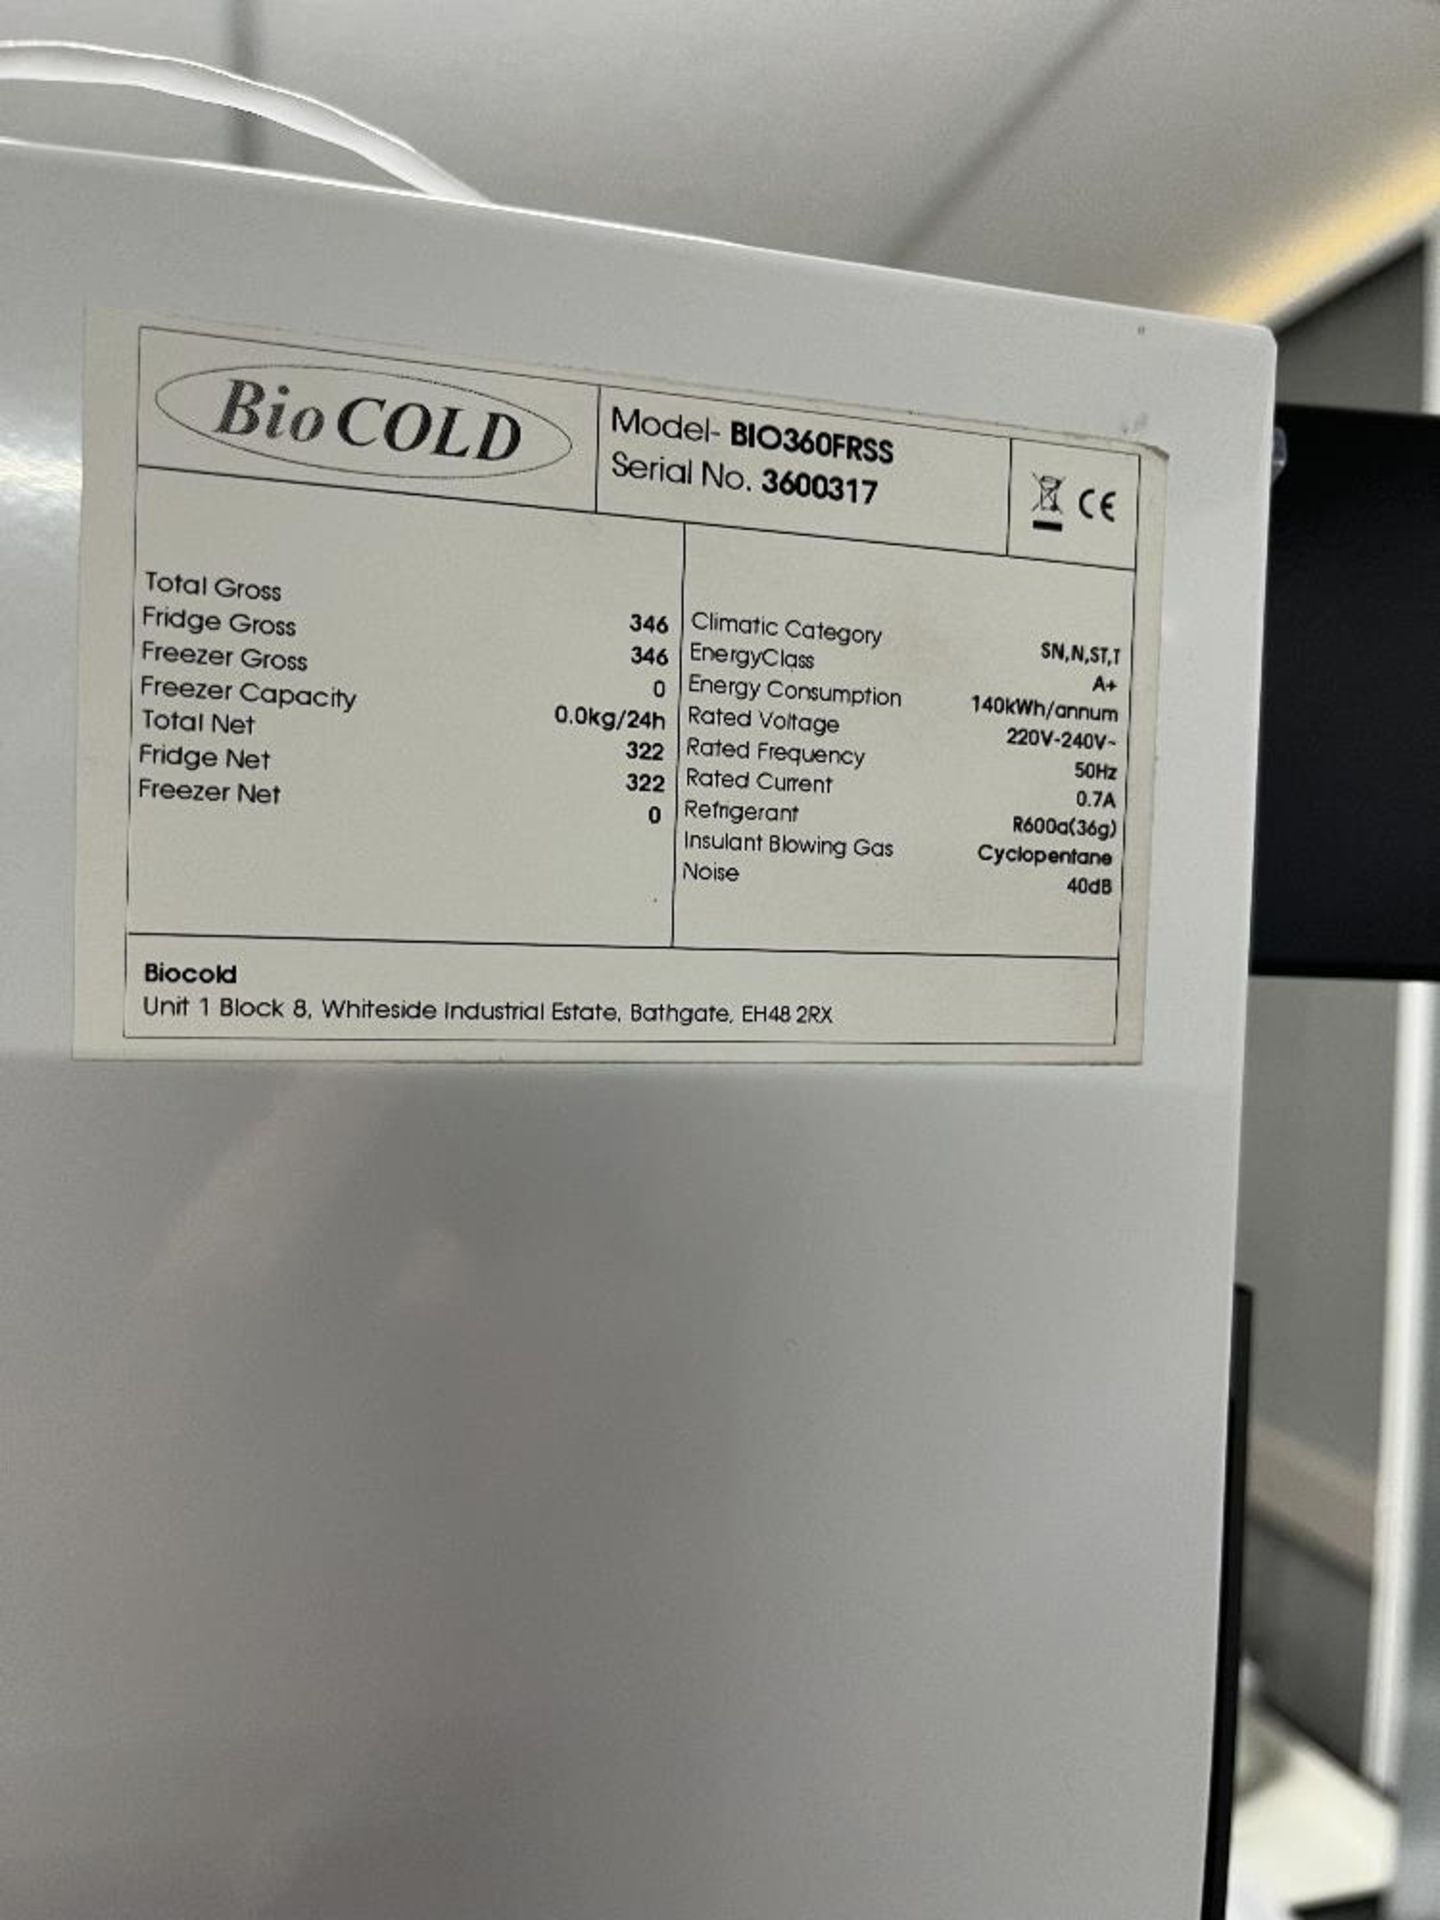 Biolcold BIO360FRSS Upright Laboratory Refrigerator - Image 6 of 6